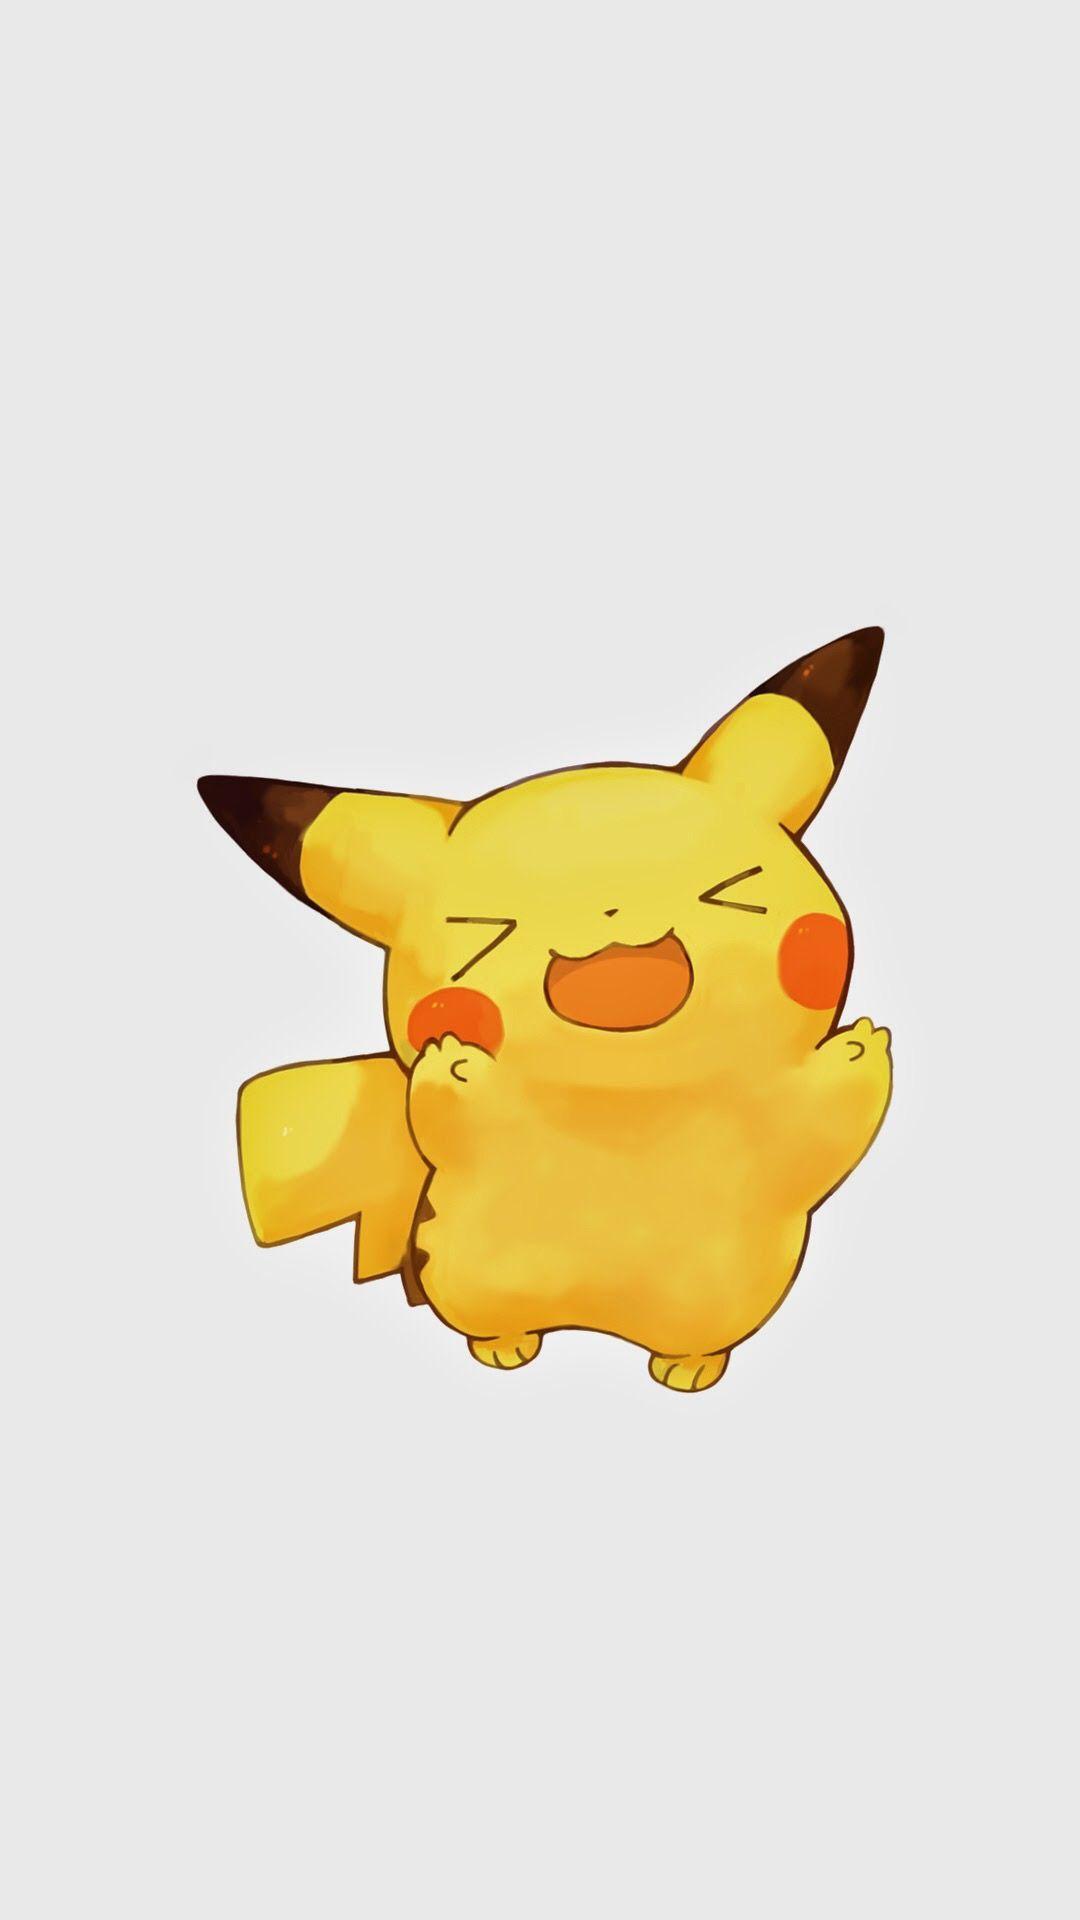 Tap image for more funny cute Pikachu wallpaper! Pikachu